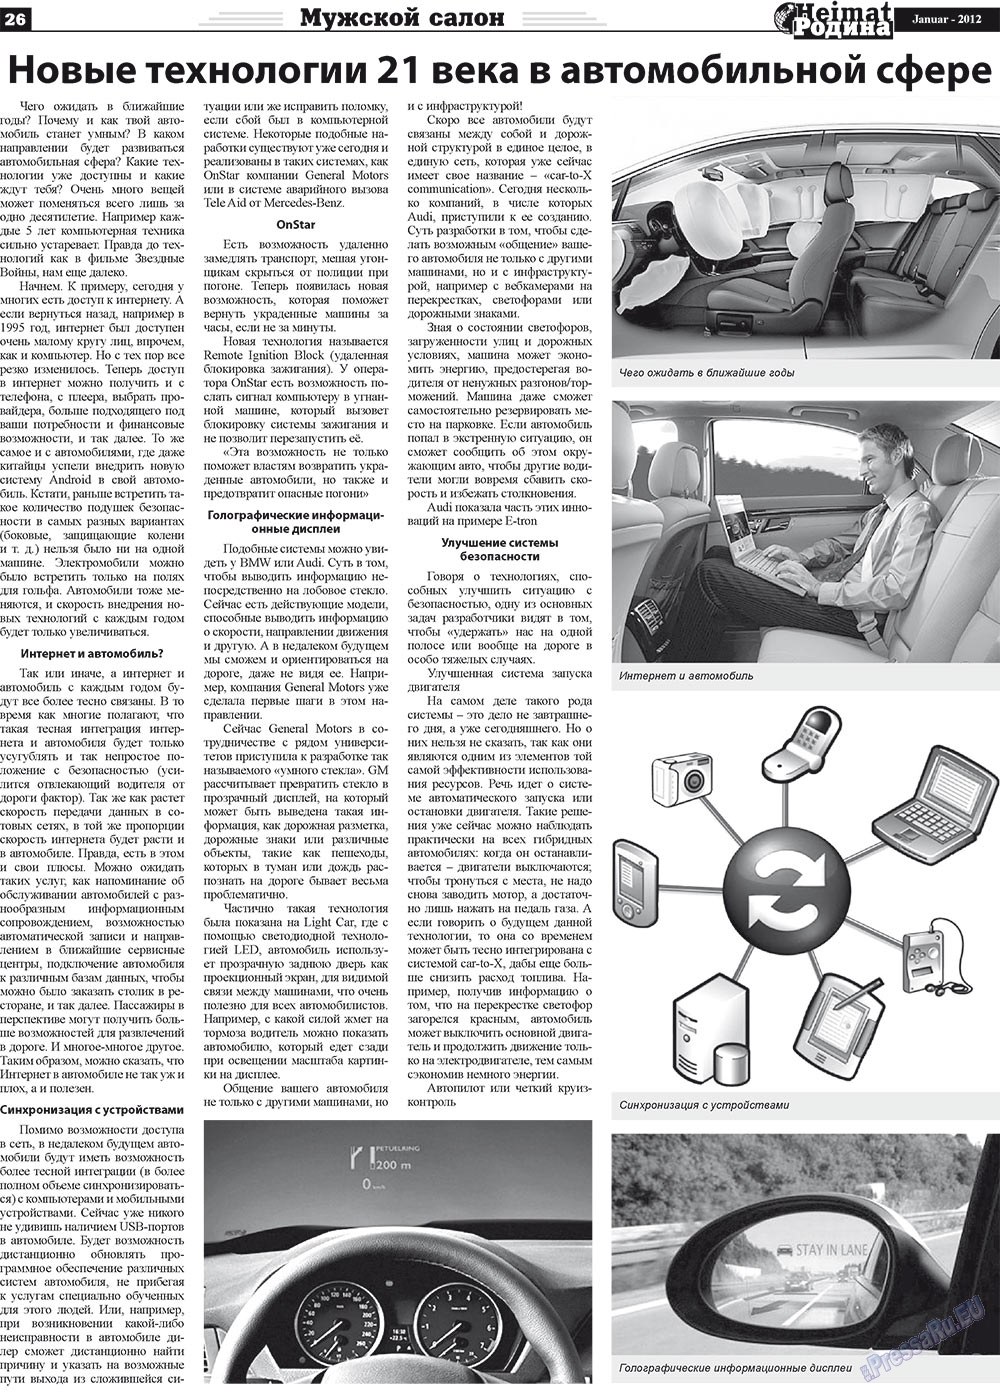 Heimat-Родина, газета. 2012 №1 стр.26